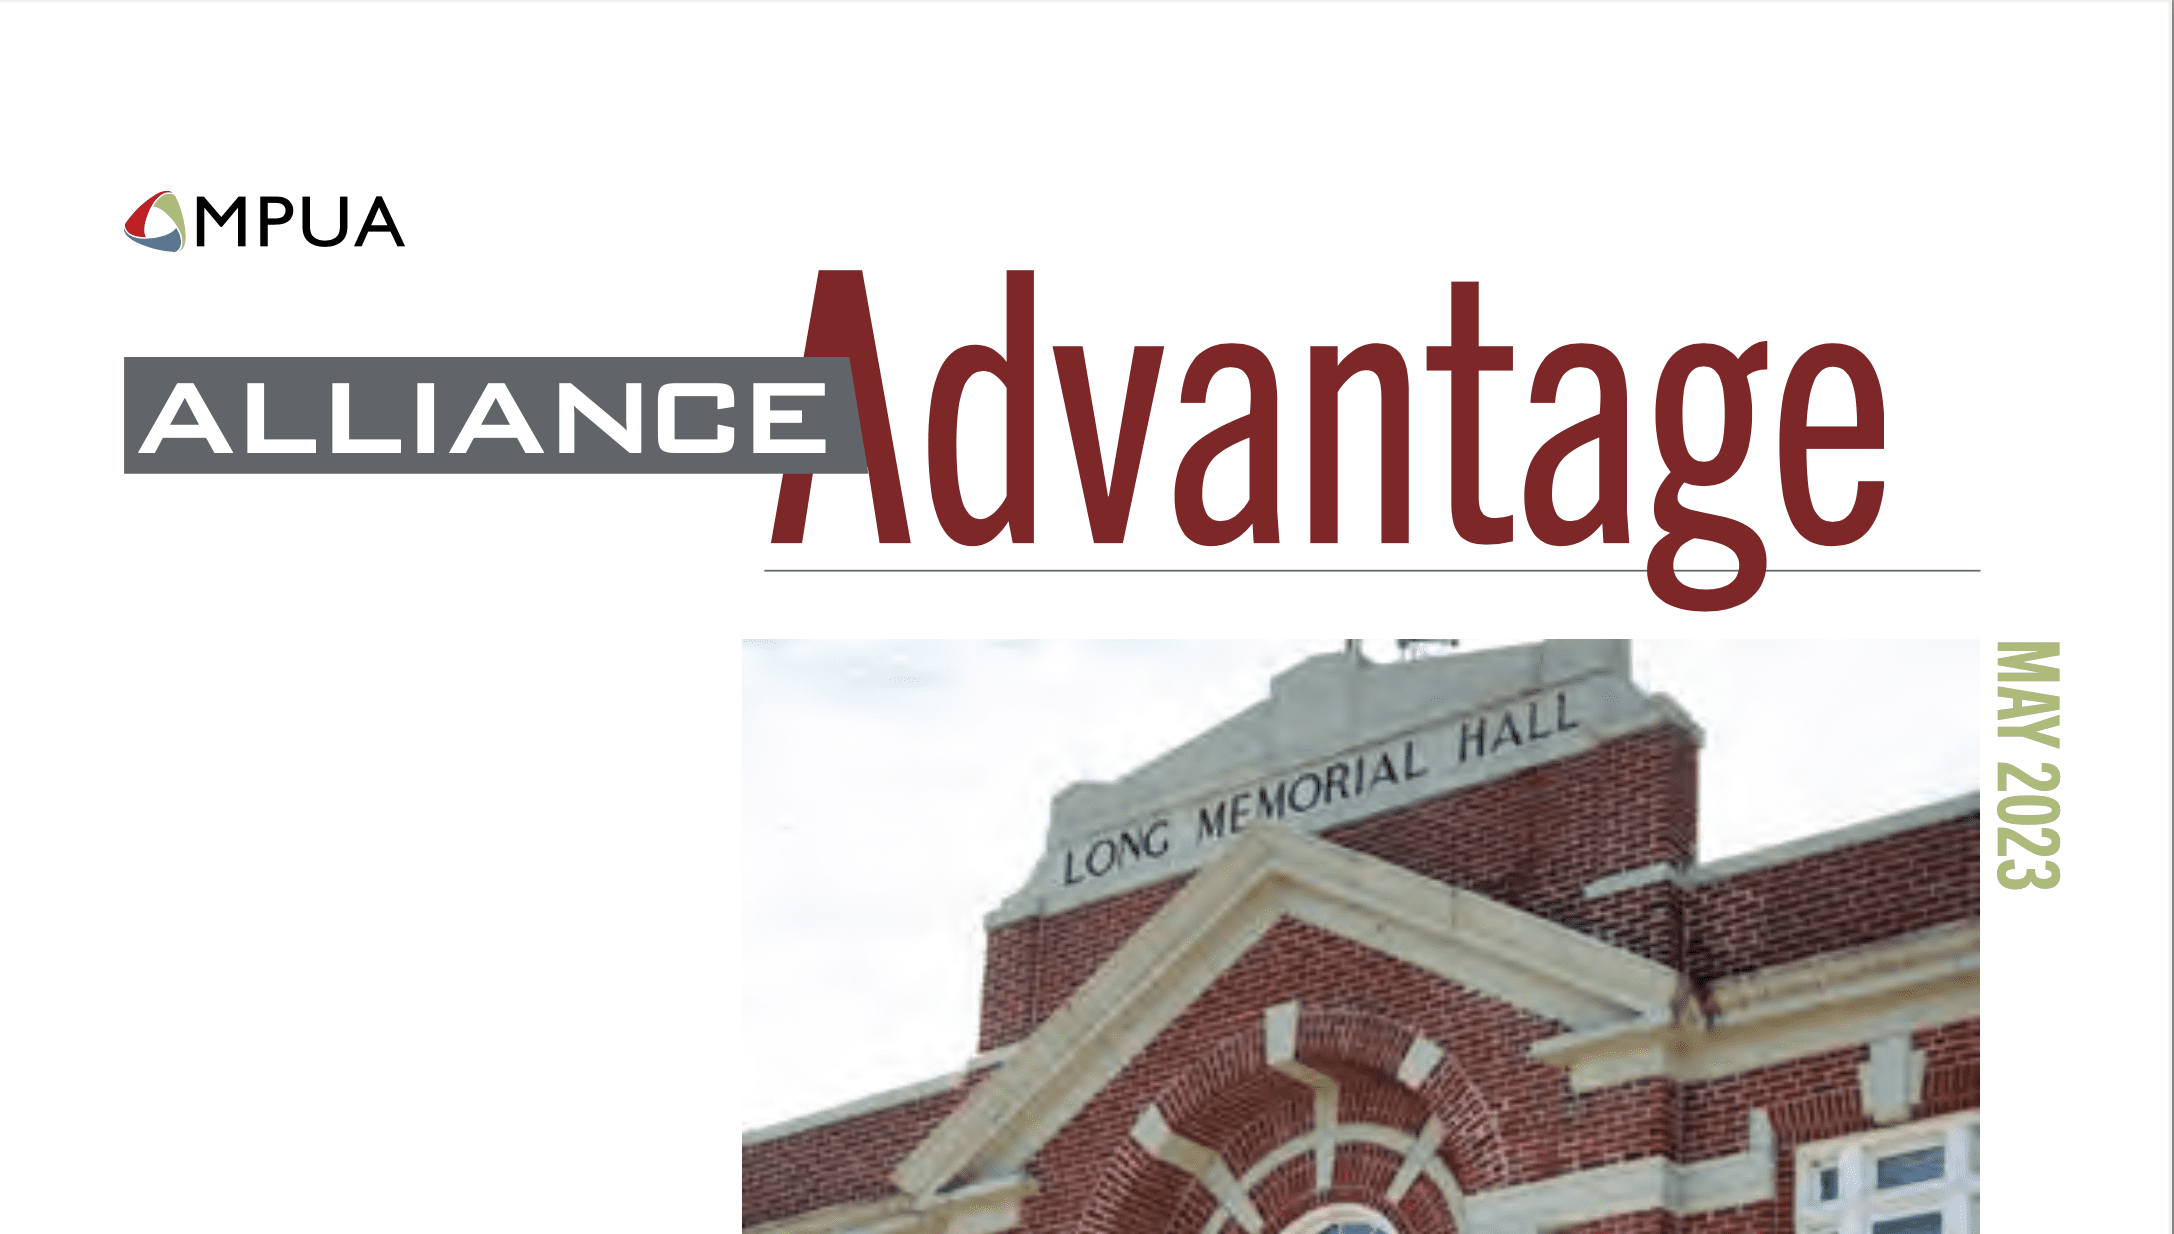 MPUA Alliance Advantage Magazine